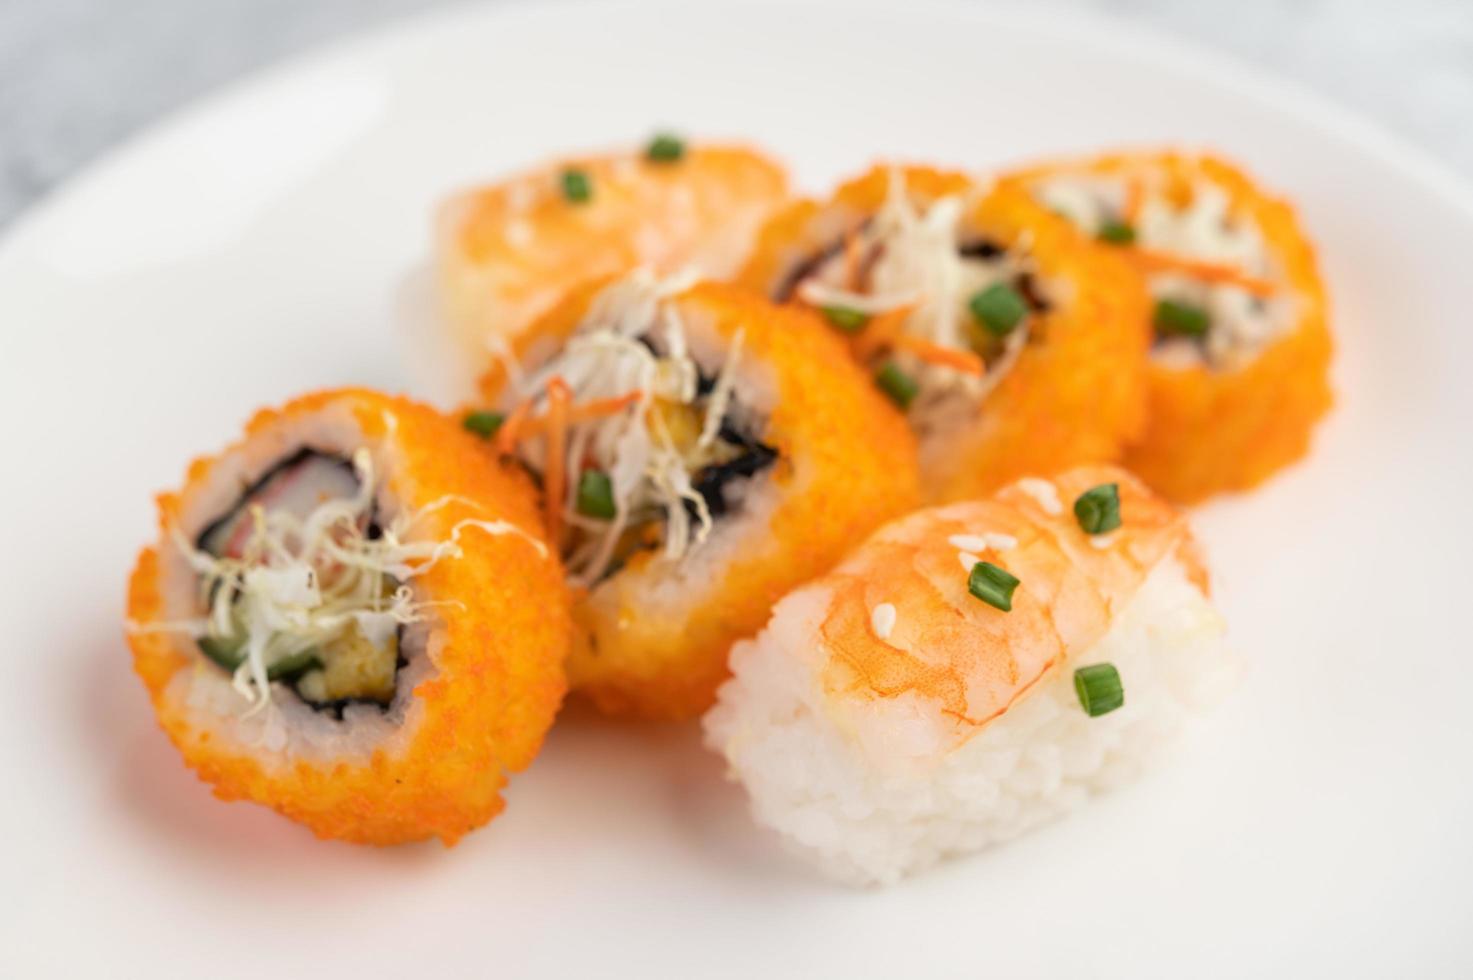 Assorted sushi rolls photo